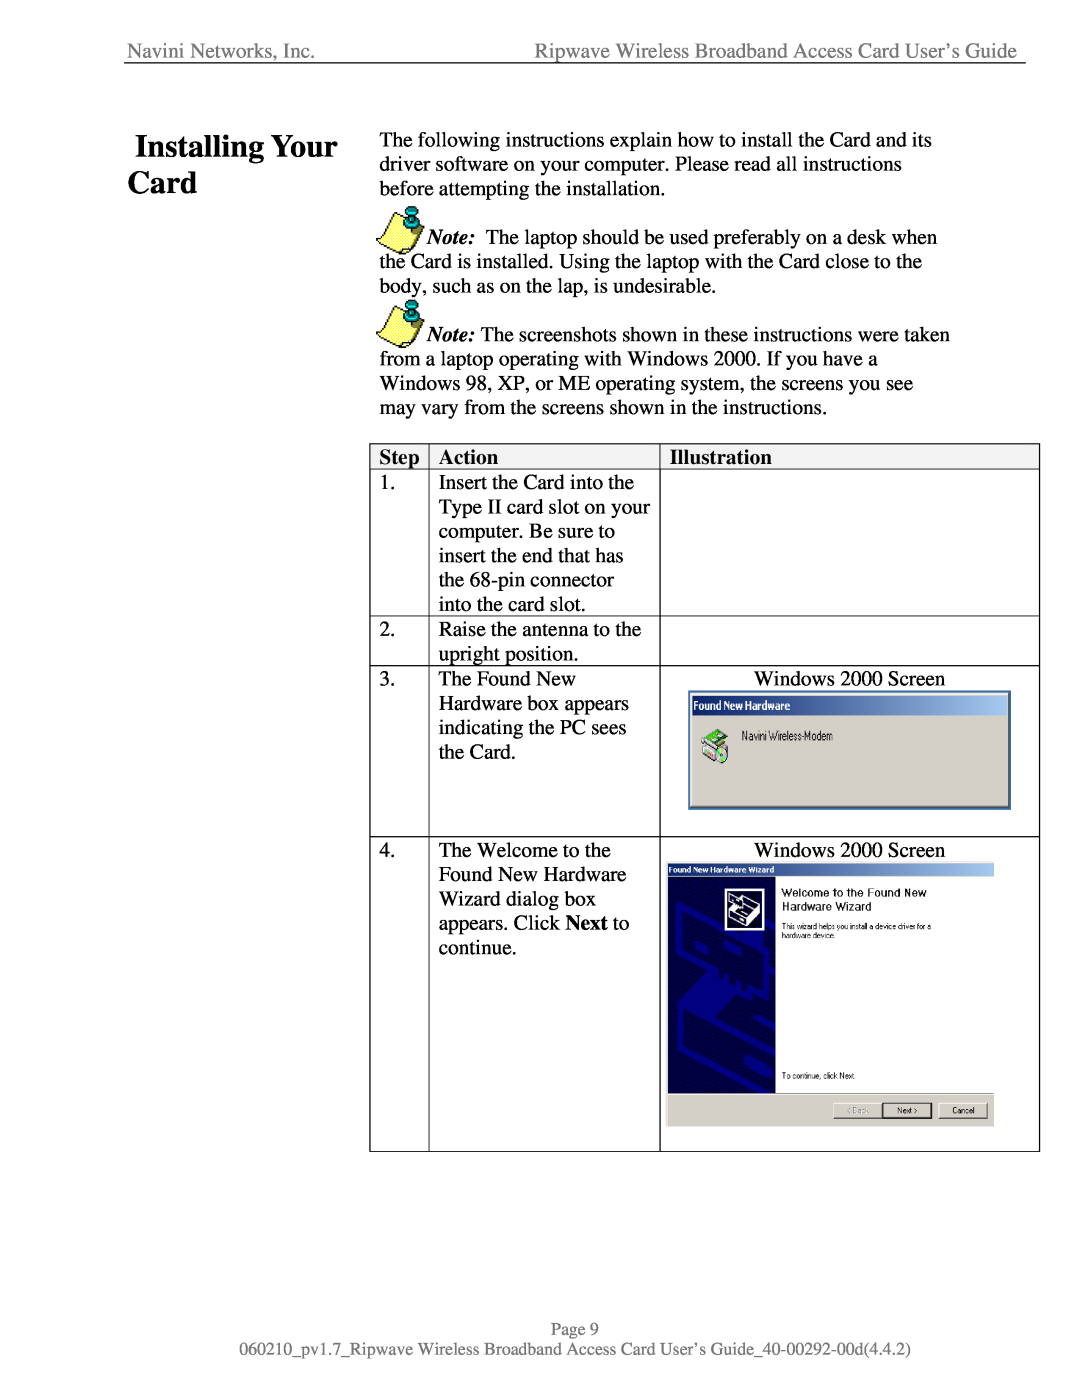 Navini Networks 40-00292-00 manual Installing Your Card, Step, Action, Illustration, Navini Networks, Inc 